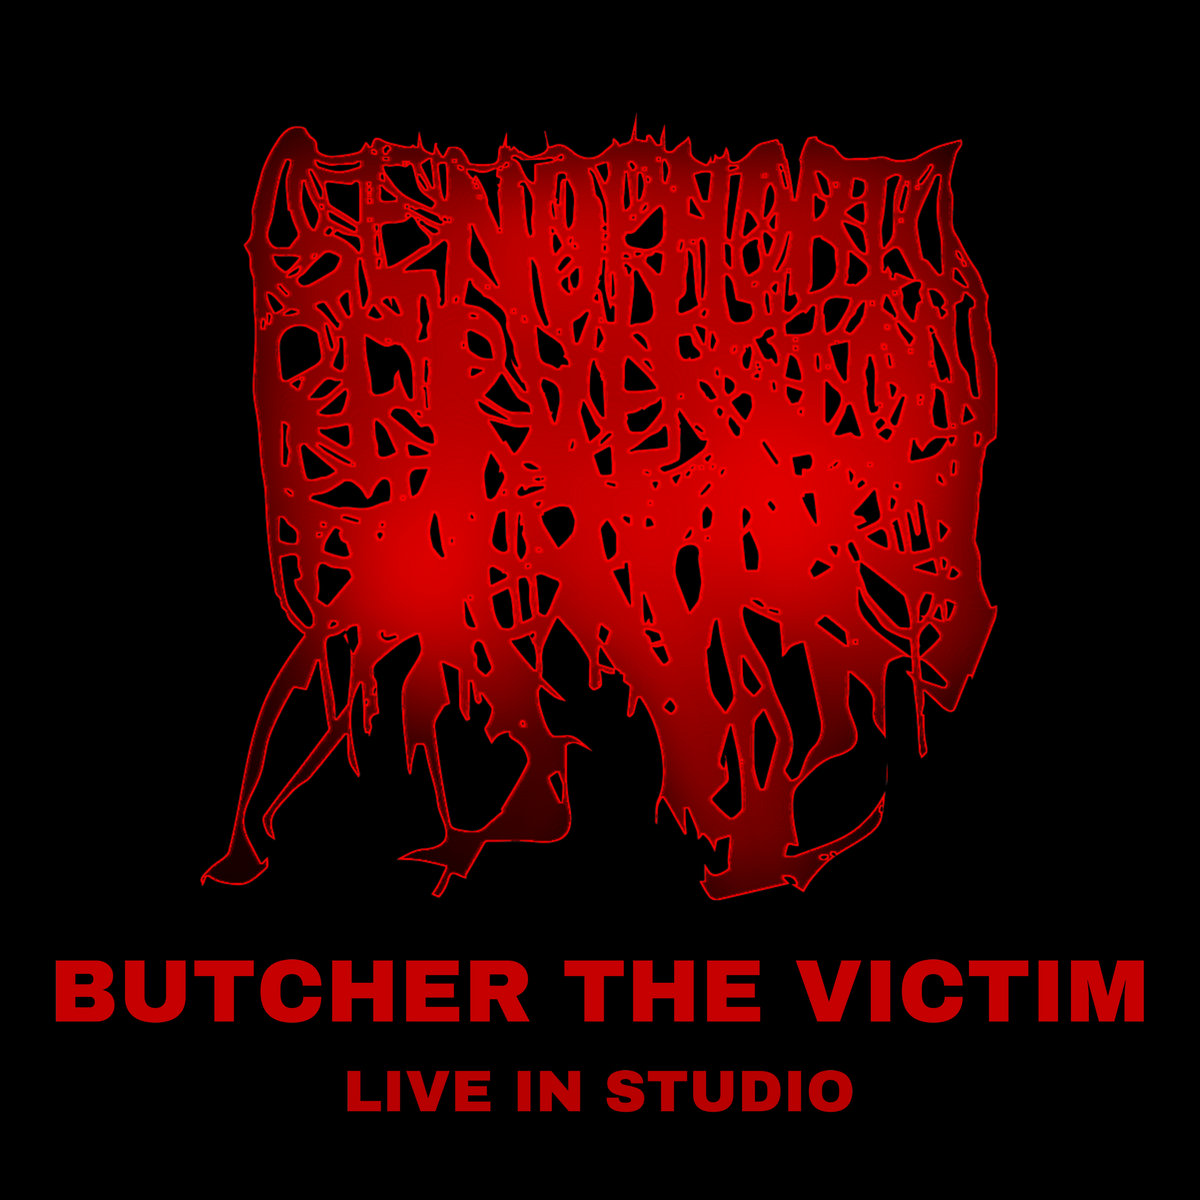 GENOPHOBIC PERVERSION - Butcher The Victim (Live In Studio) cover 